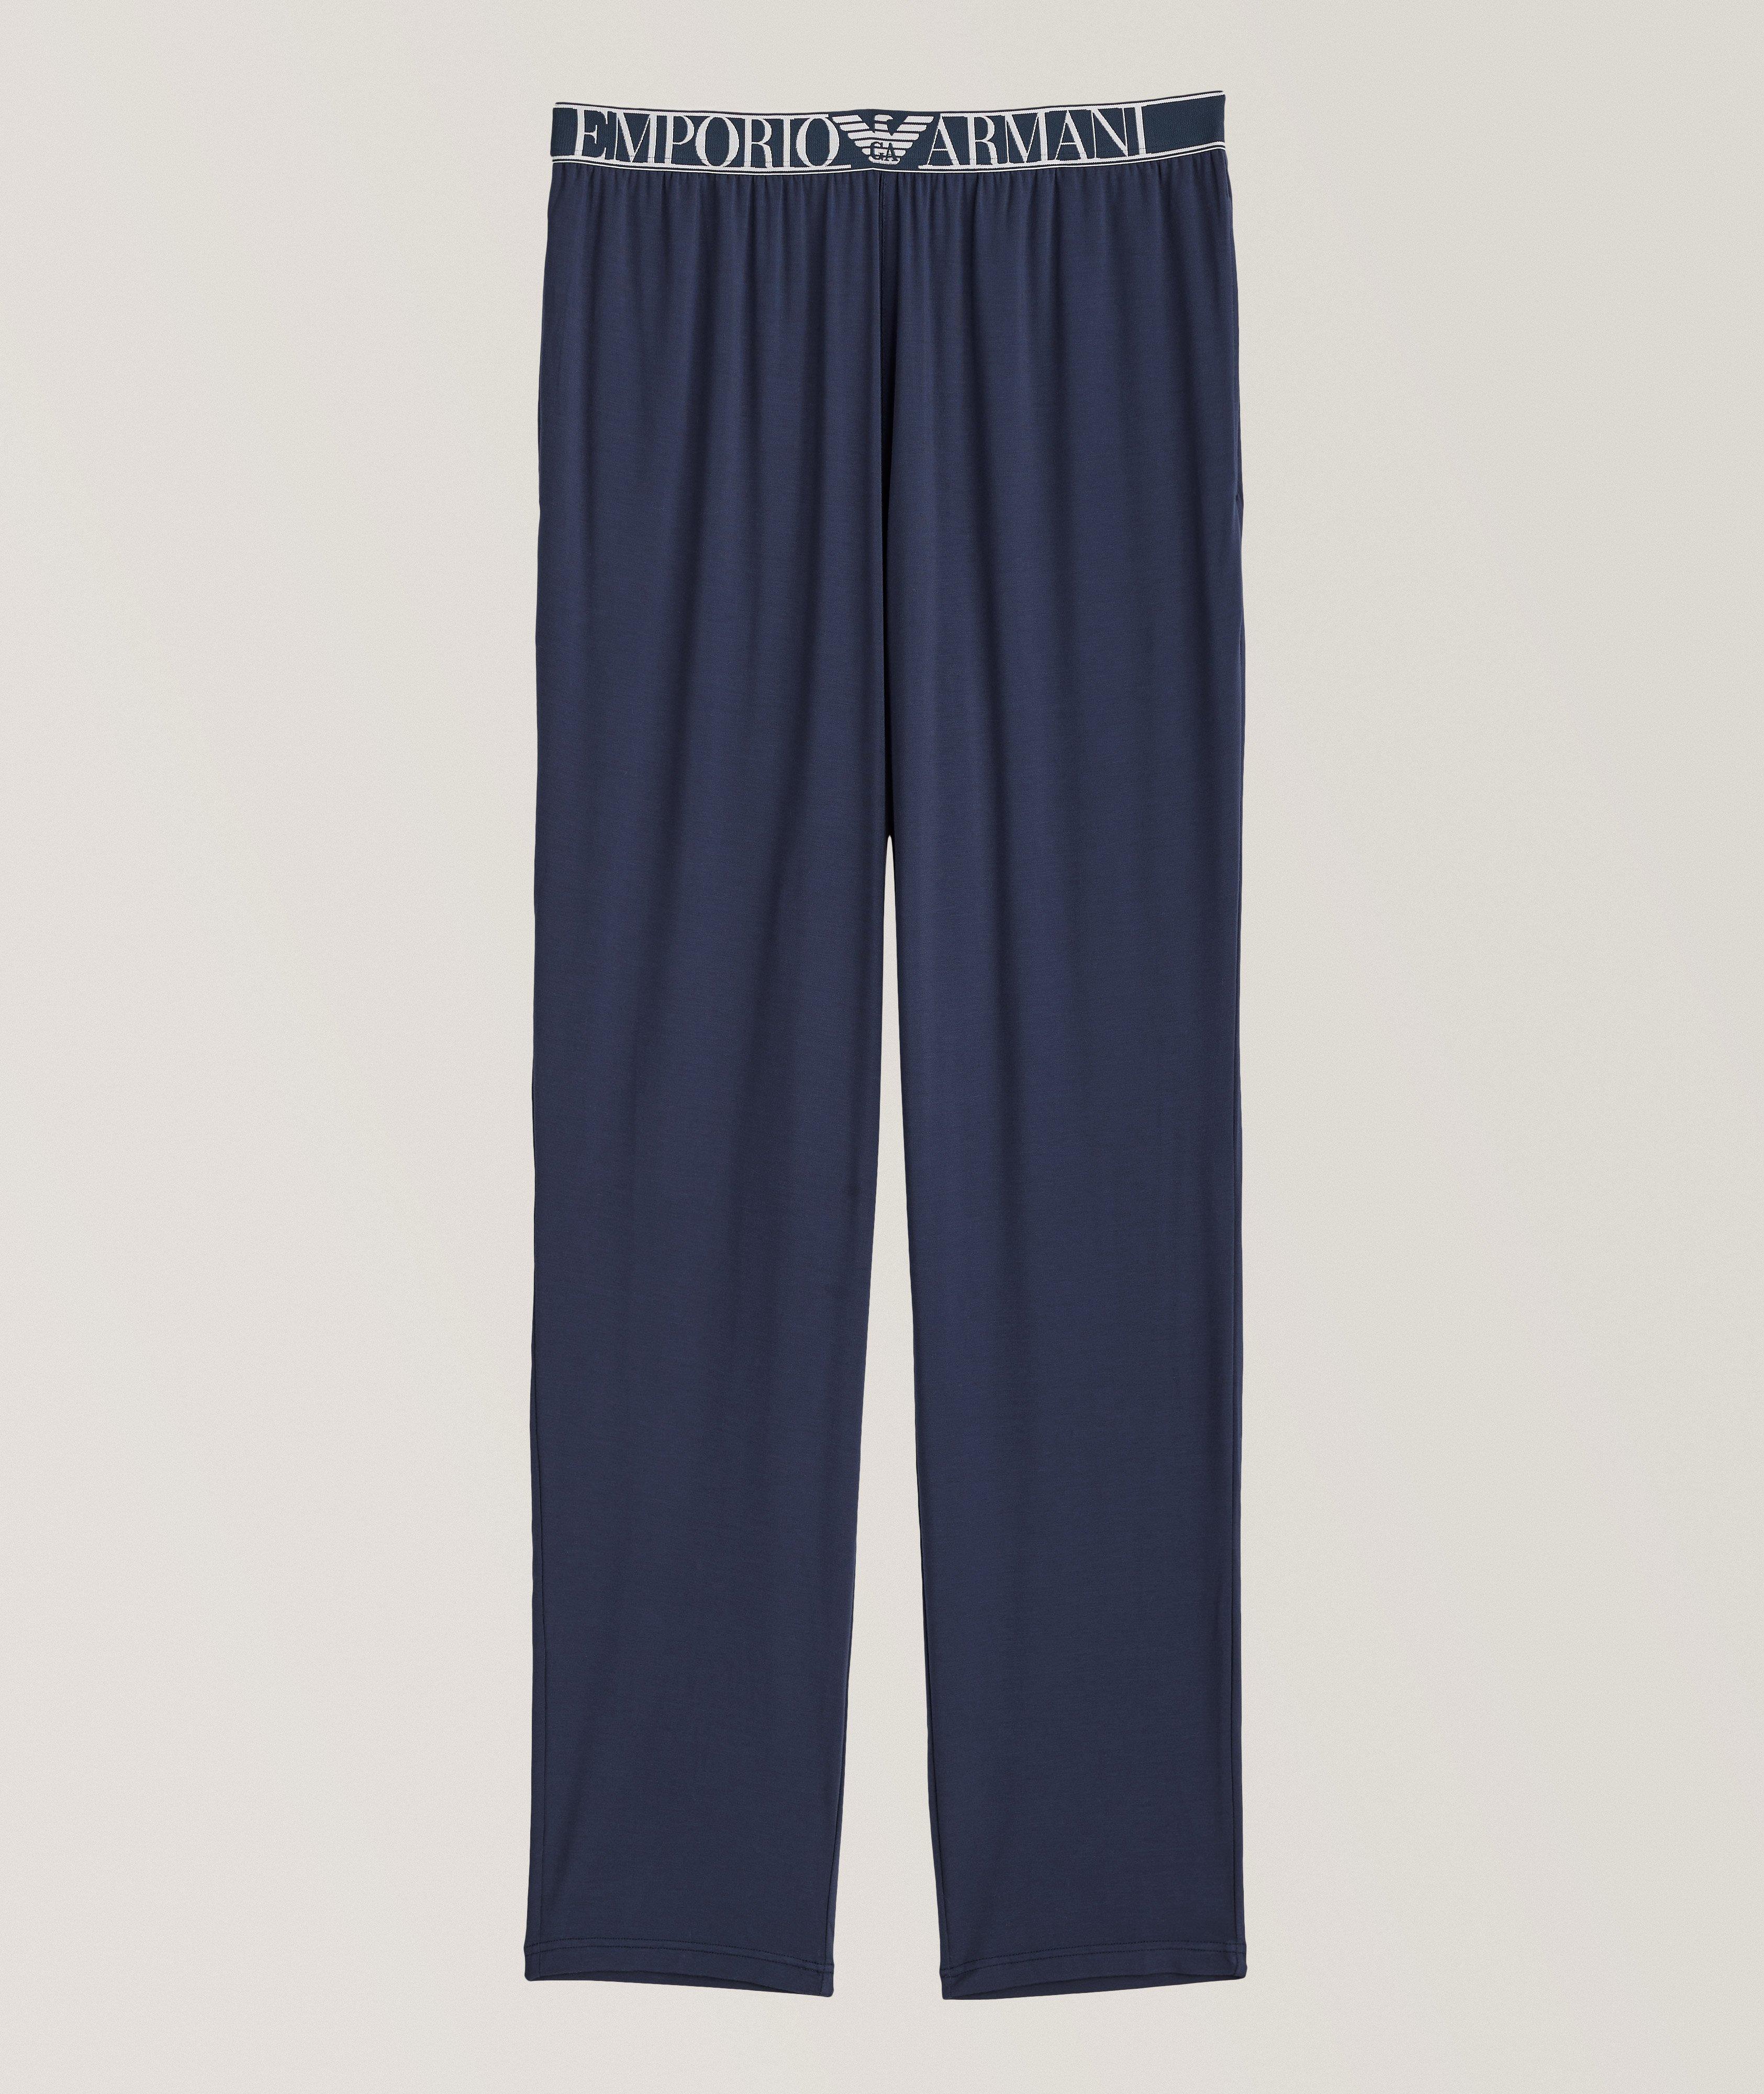 Modal Pajama Shorts